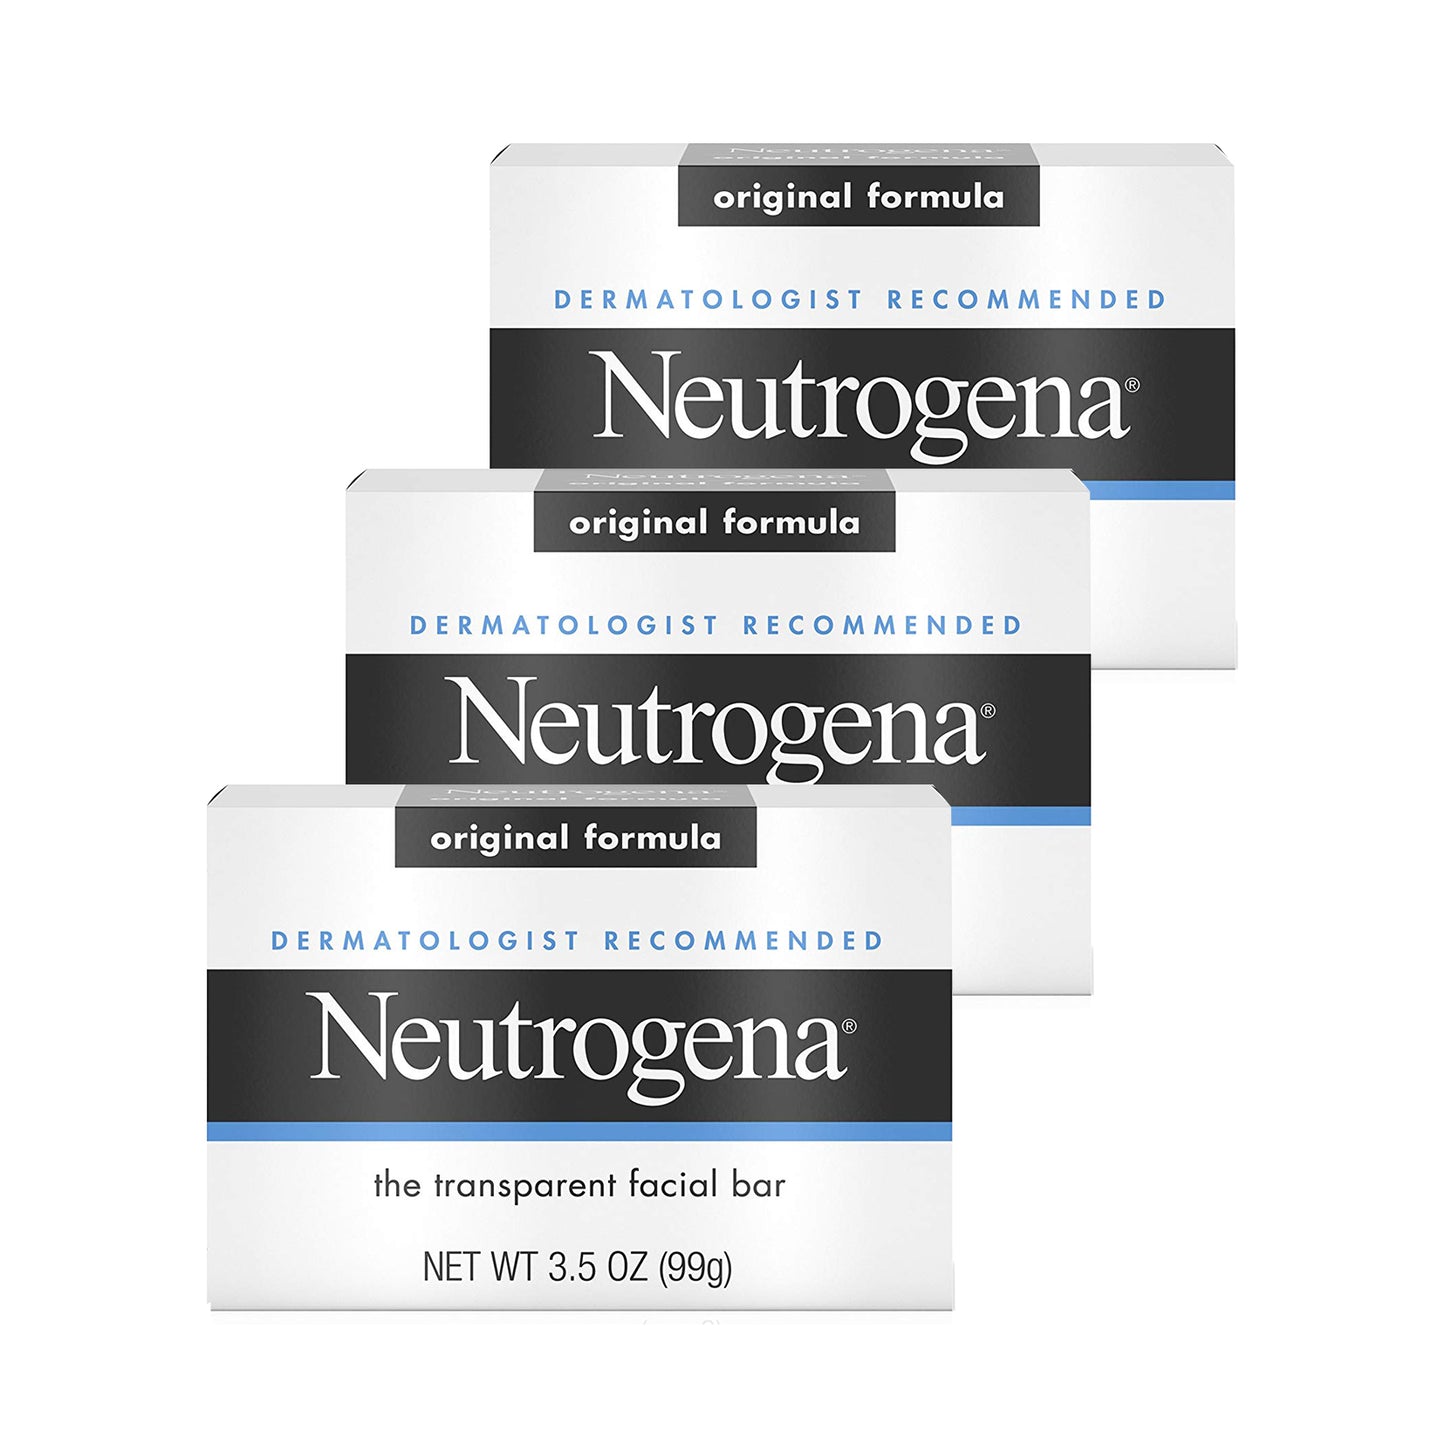 Neutrogena Facial Cleansing Bar 3.5 oz 3-Pack